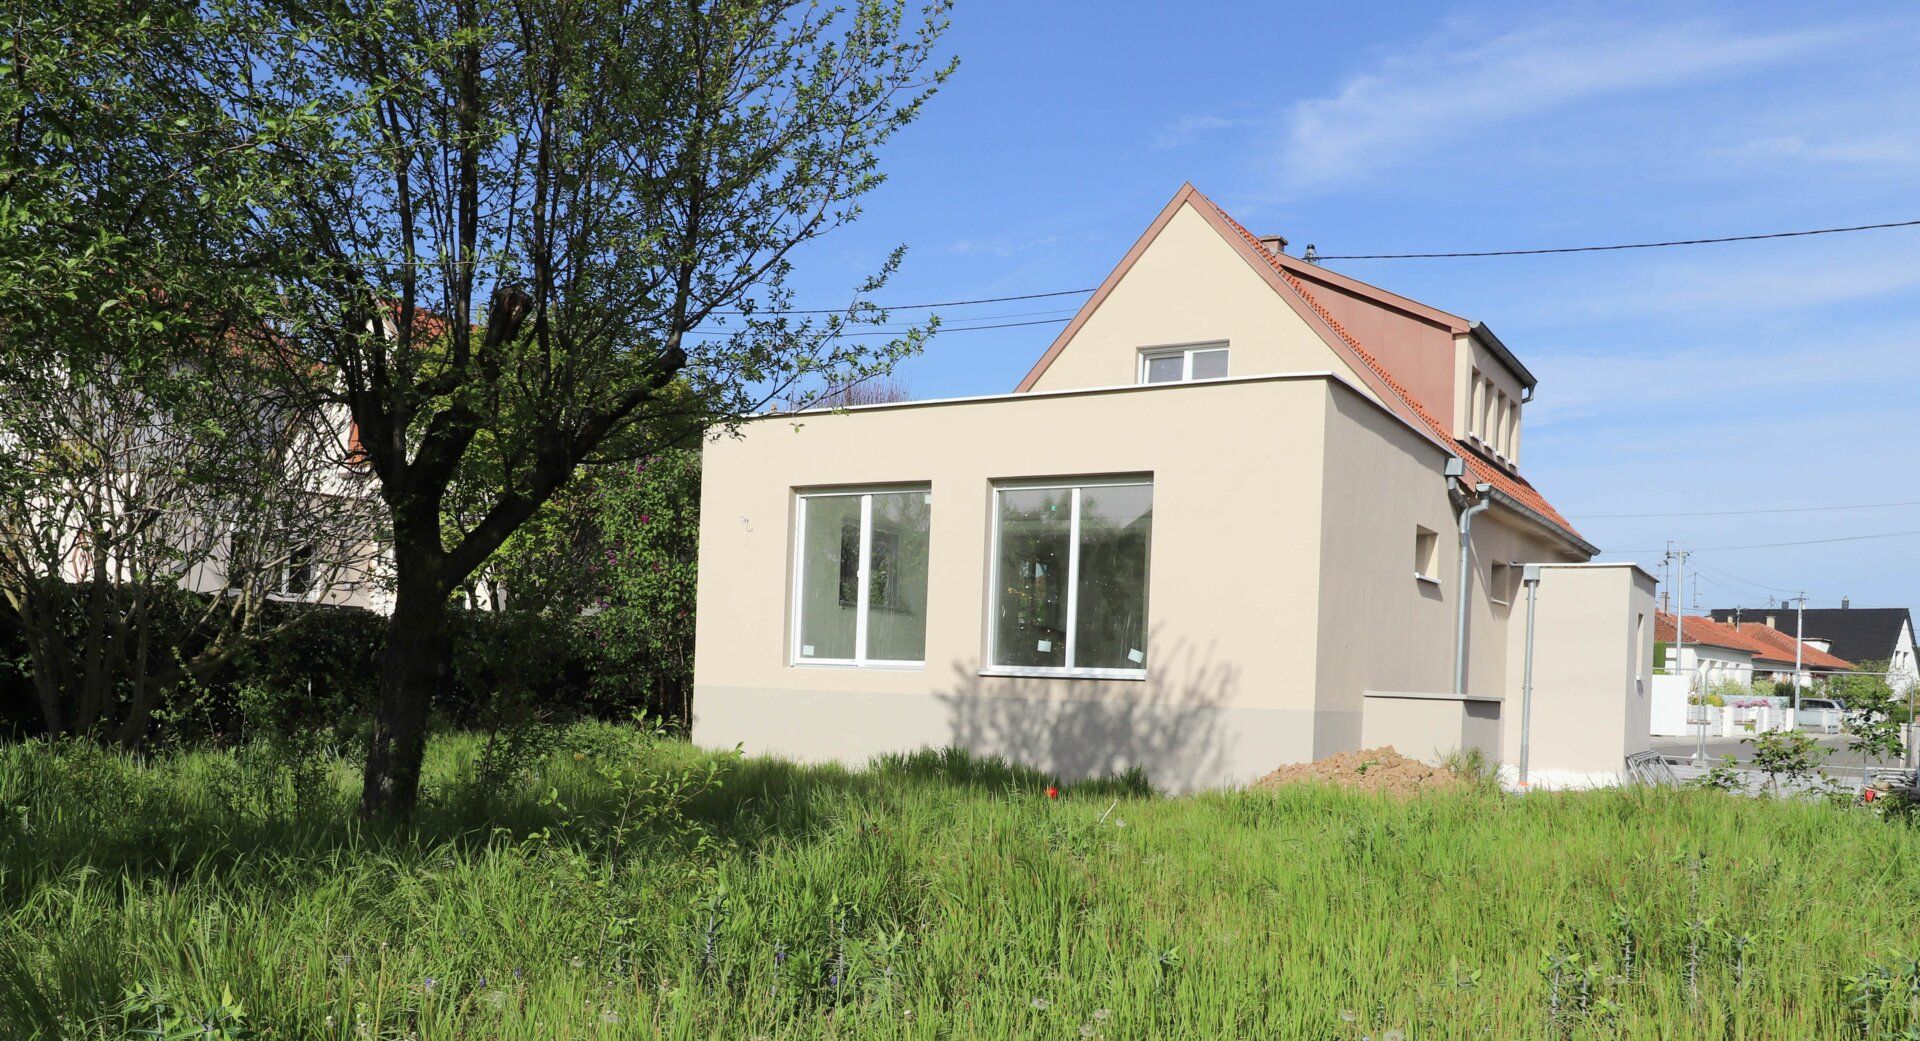 Maison à vendre 5 135m2 à Souffelweyersheim vignette-2